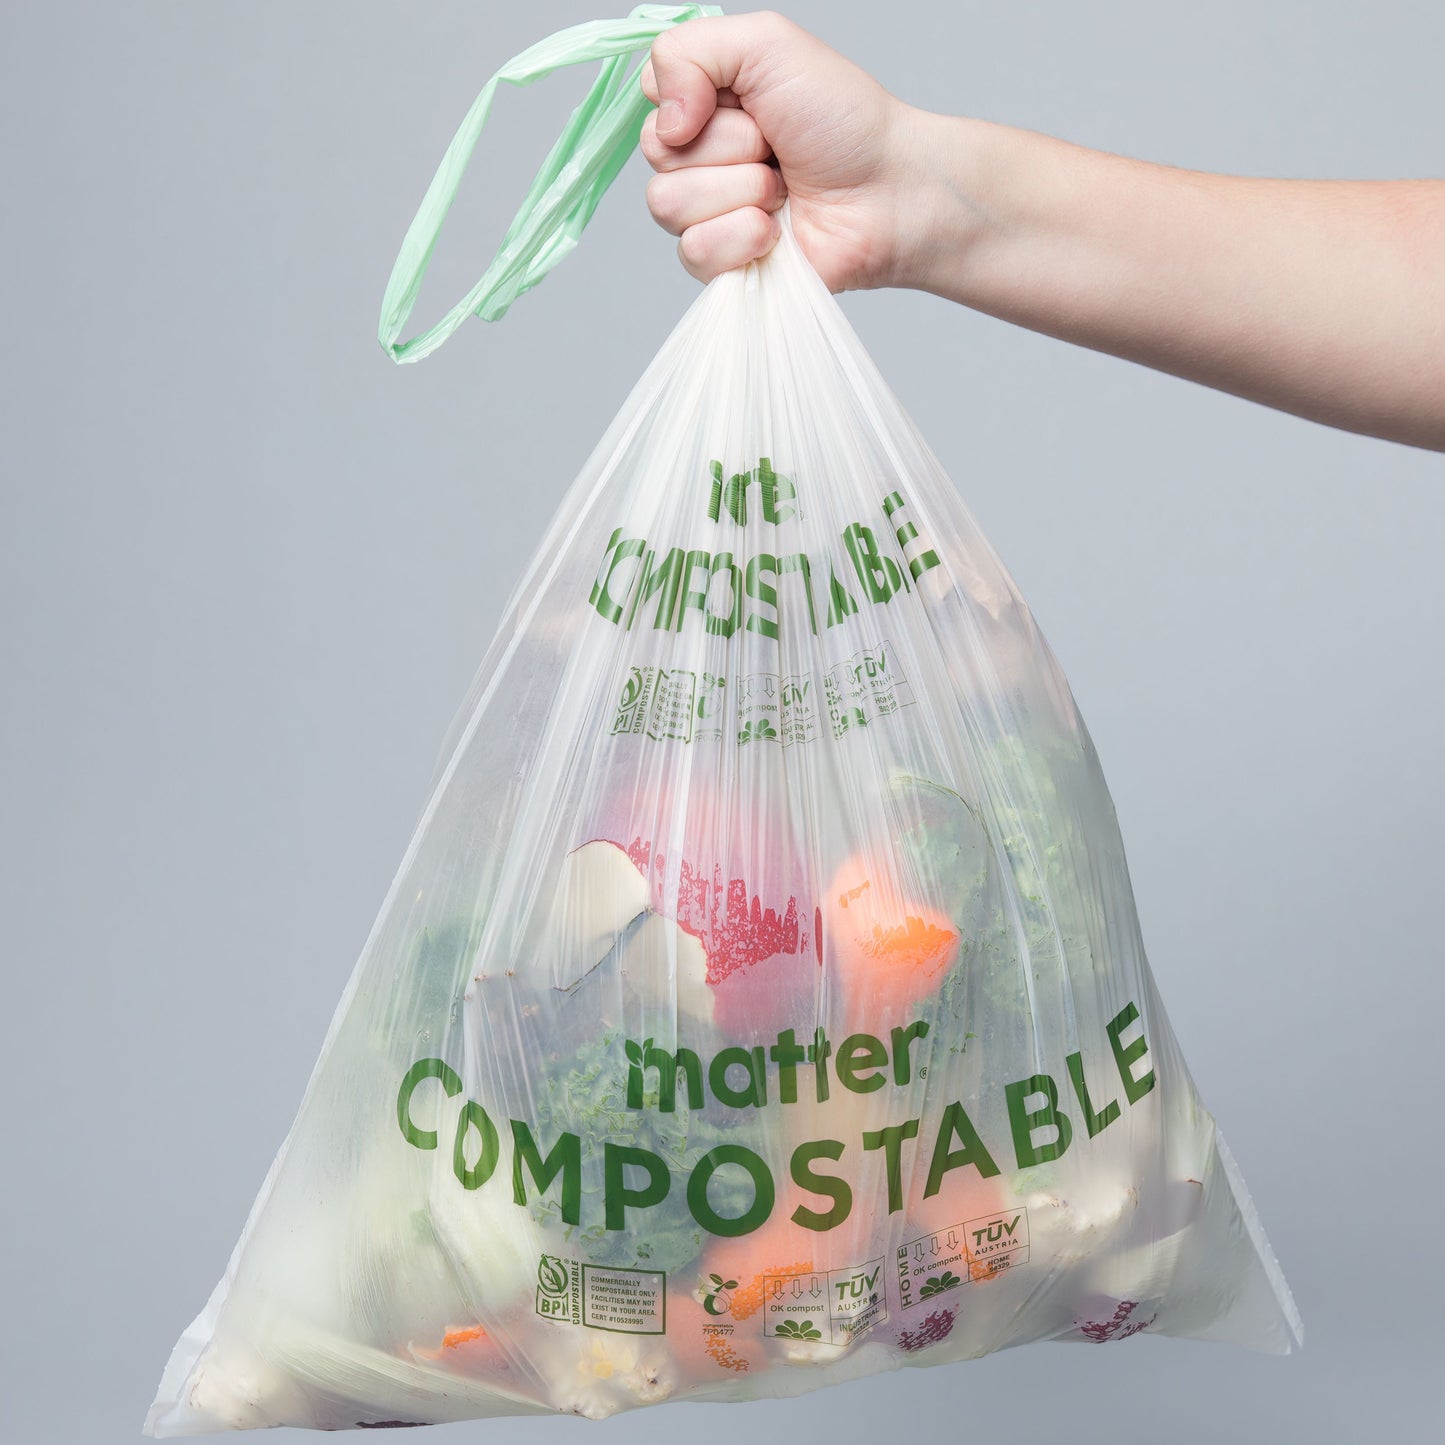 Matter Compostable Food Scrap 3-Gallon Bags - 25 Count